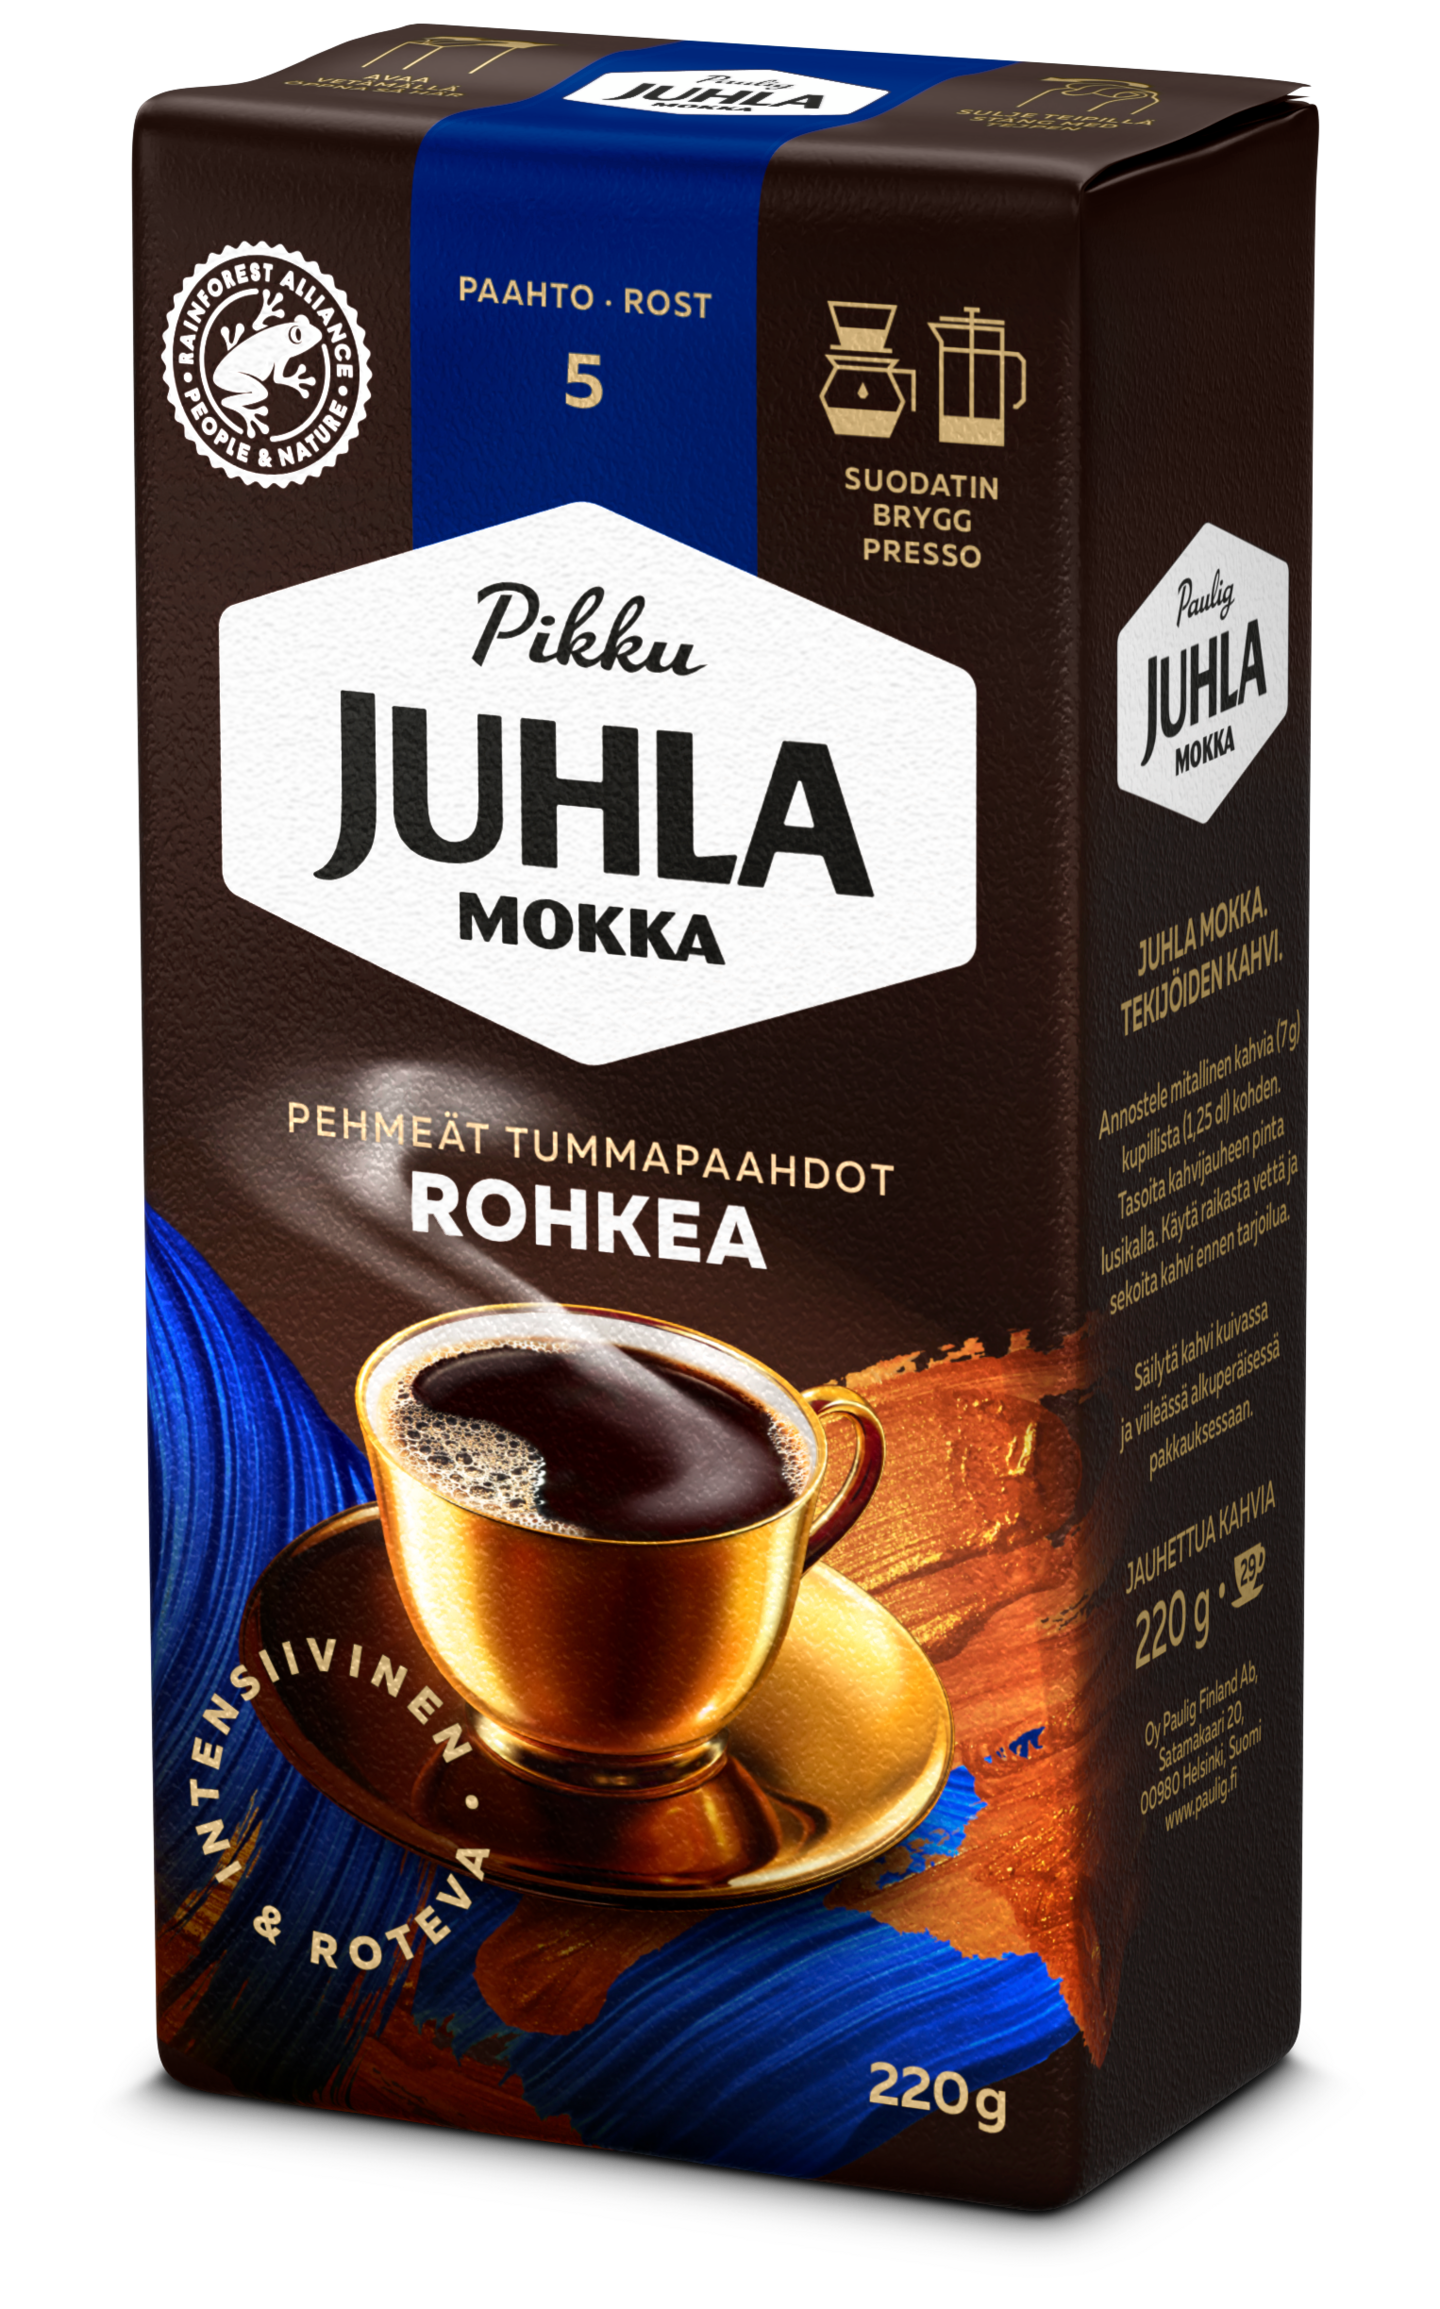 Paulig Juhla Mokka Rohkea kahvi sj 220g